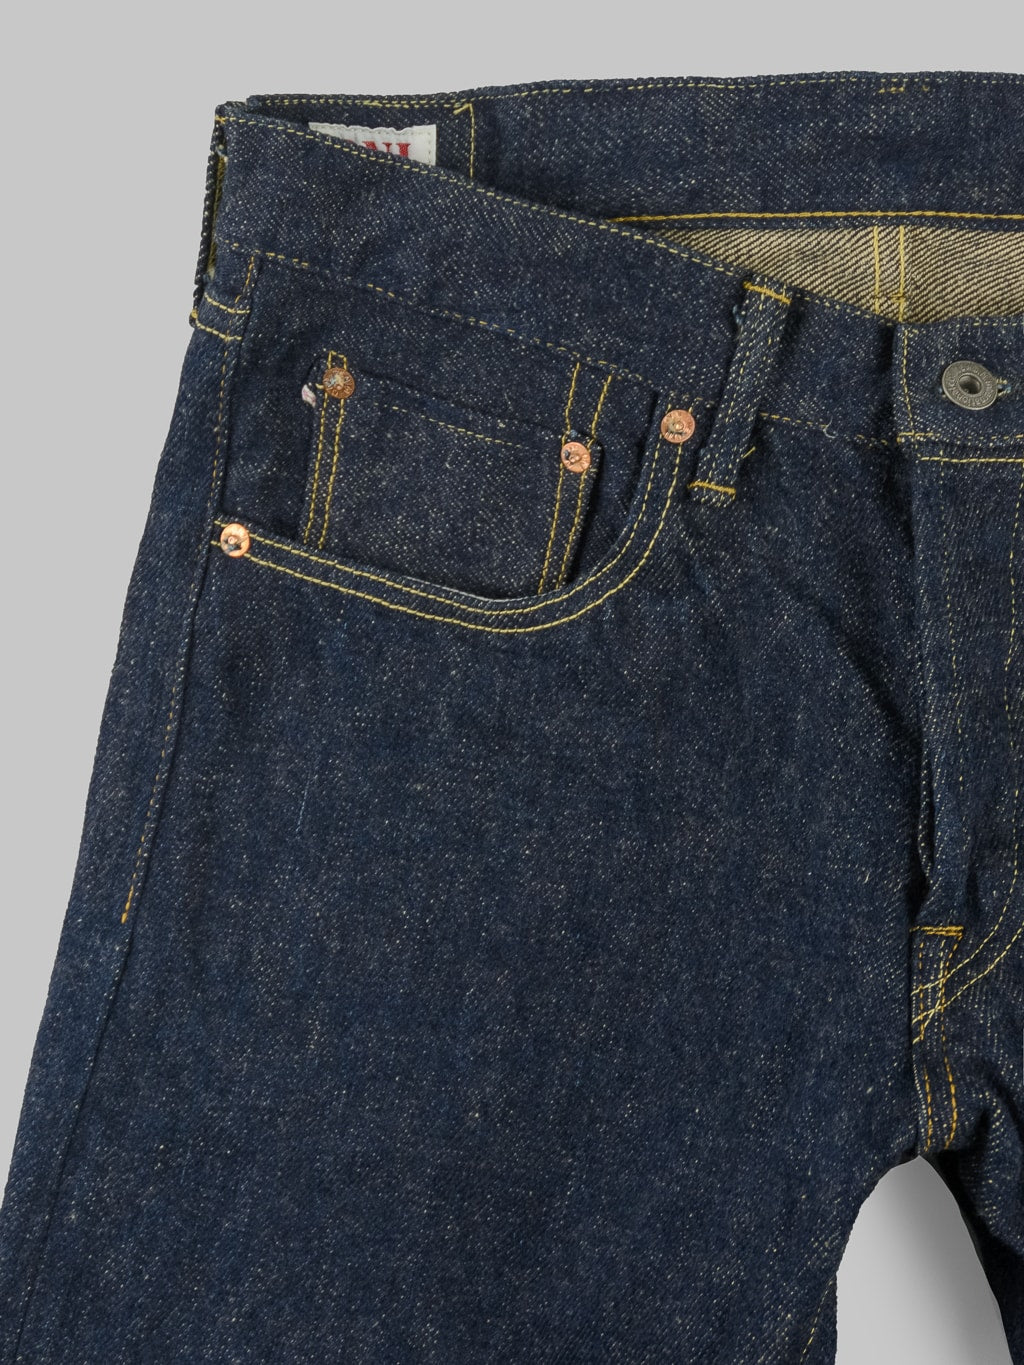 ONI Denim 544ZR Secret Denim Stylish Tapered Jeans front pocket detail